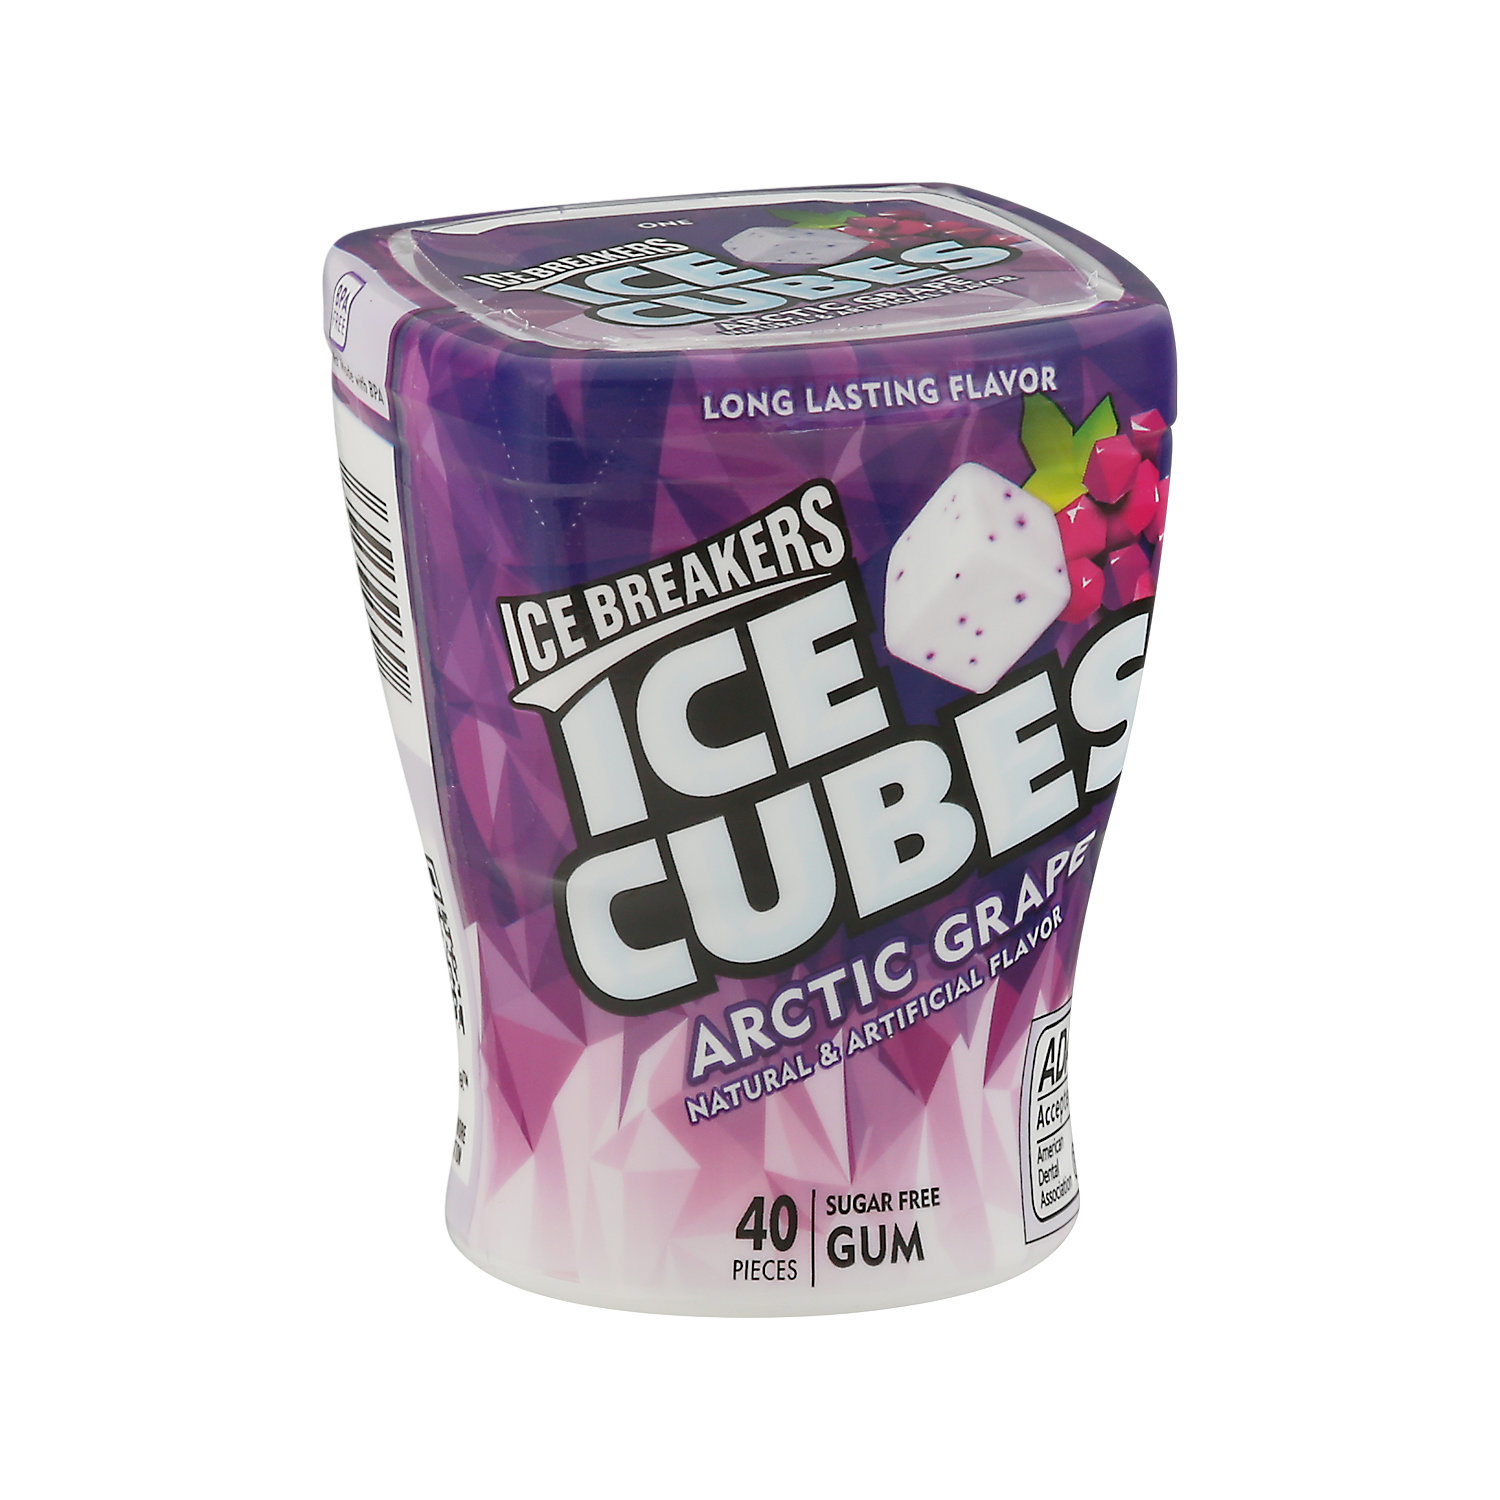 Ice Breakers Ice Cubes Sugar Free Chewing Gum - Arctic Grape